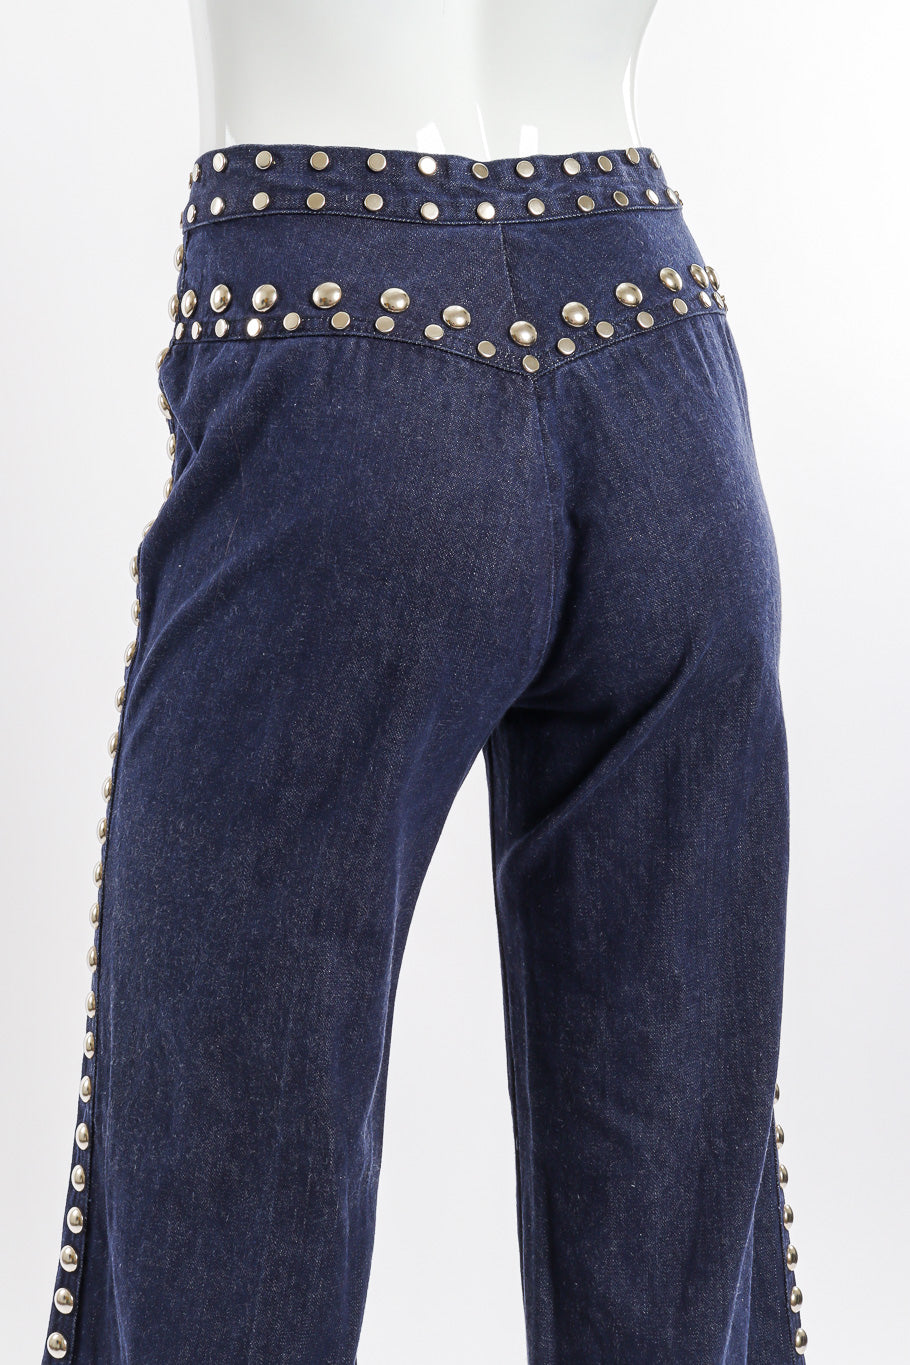 Vintage Allie Flynn Studded Denim Top and Pant Set back view of pant on mannequin closeup @Recessla